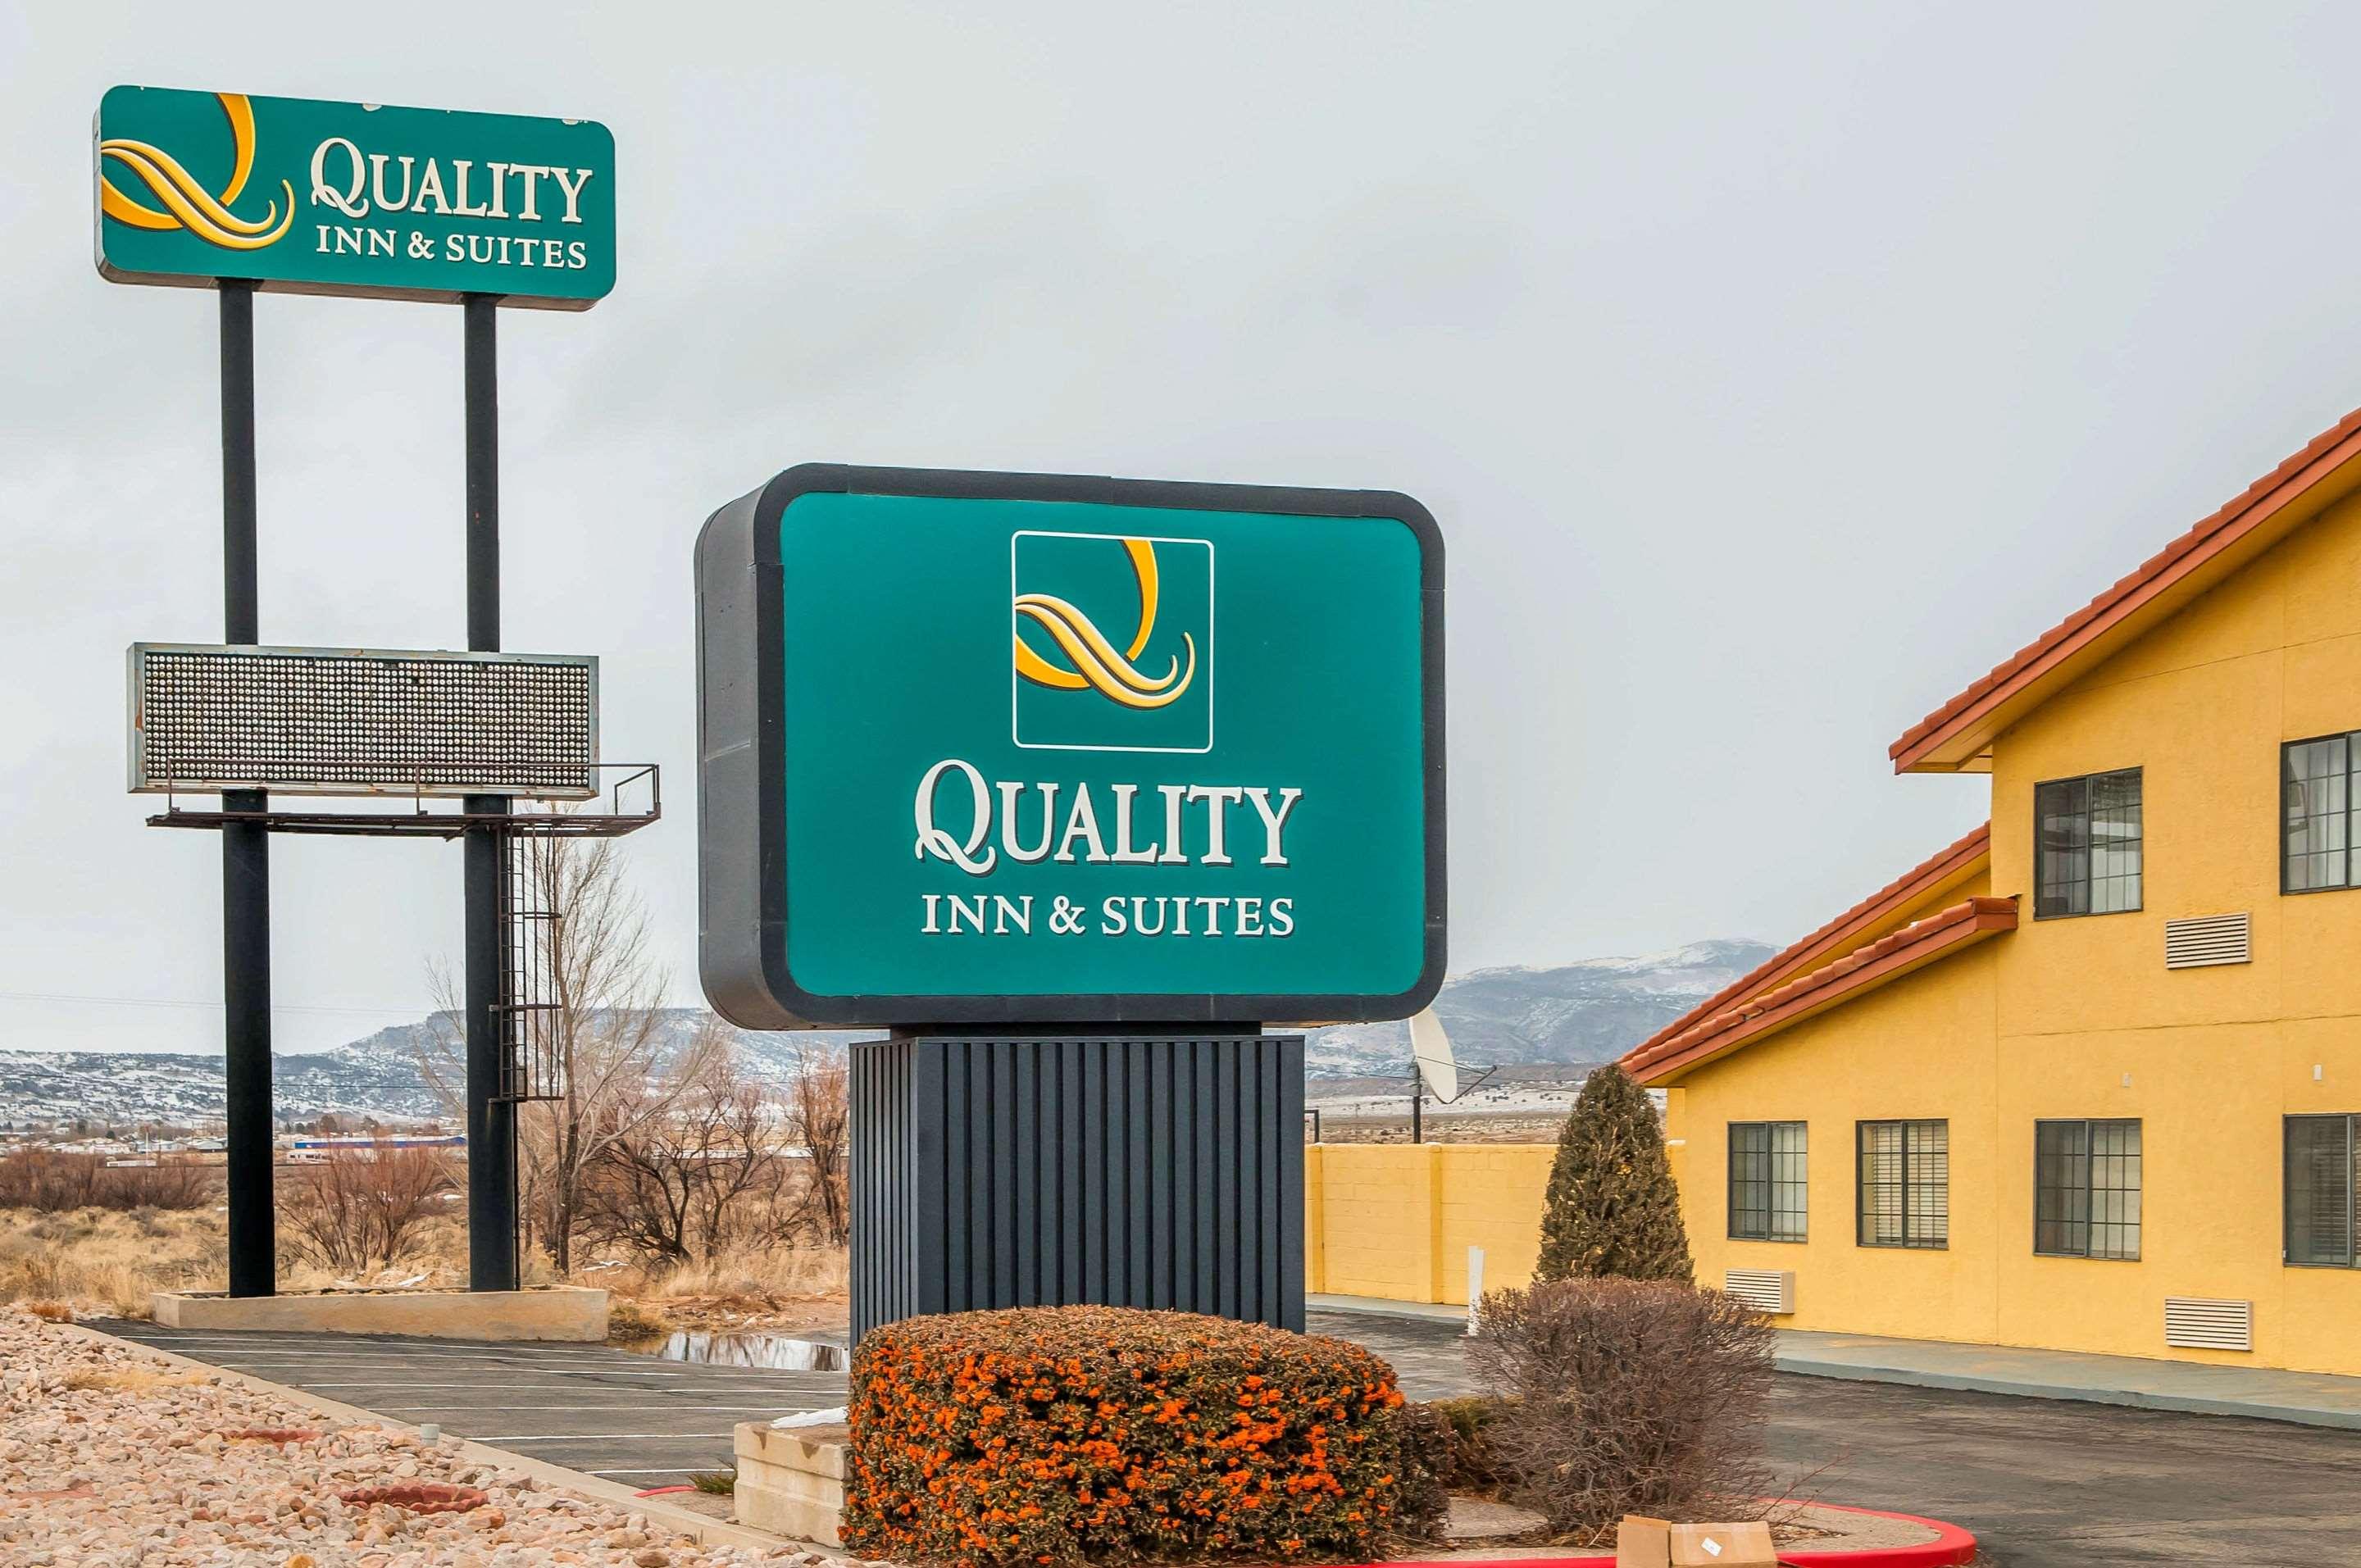 Quality Inn in Grants